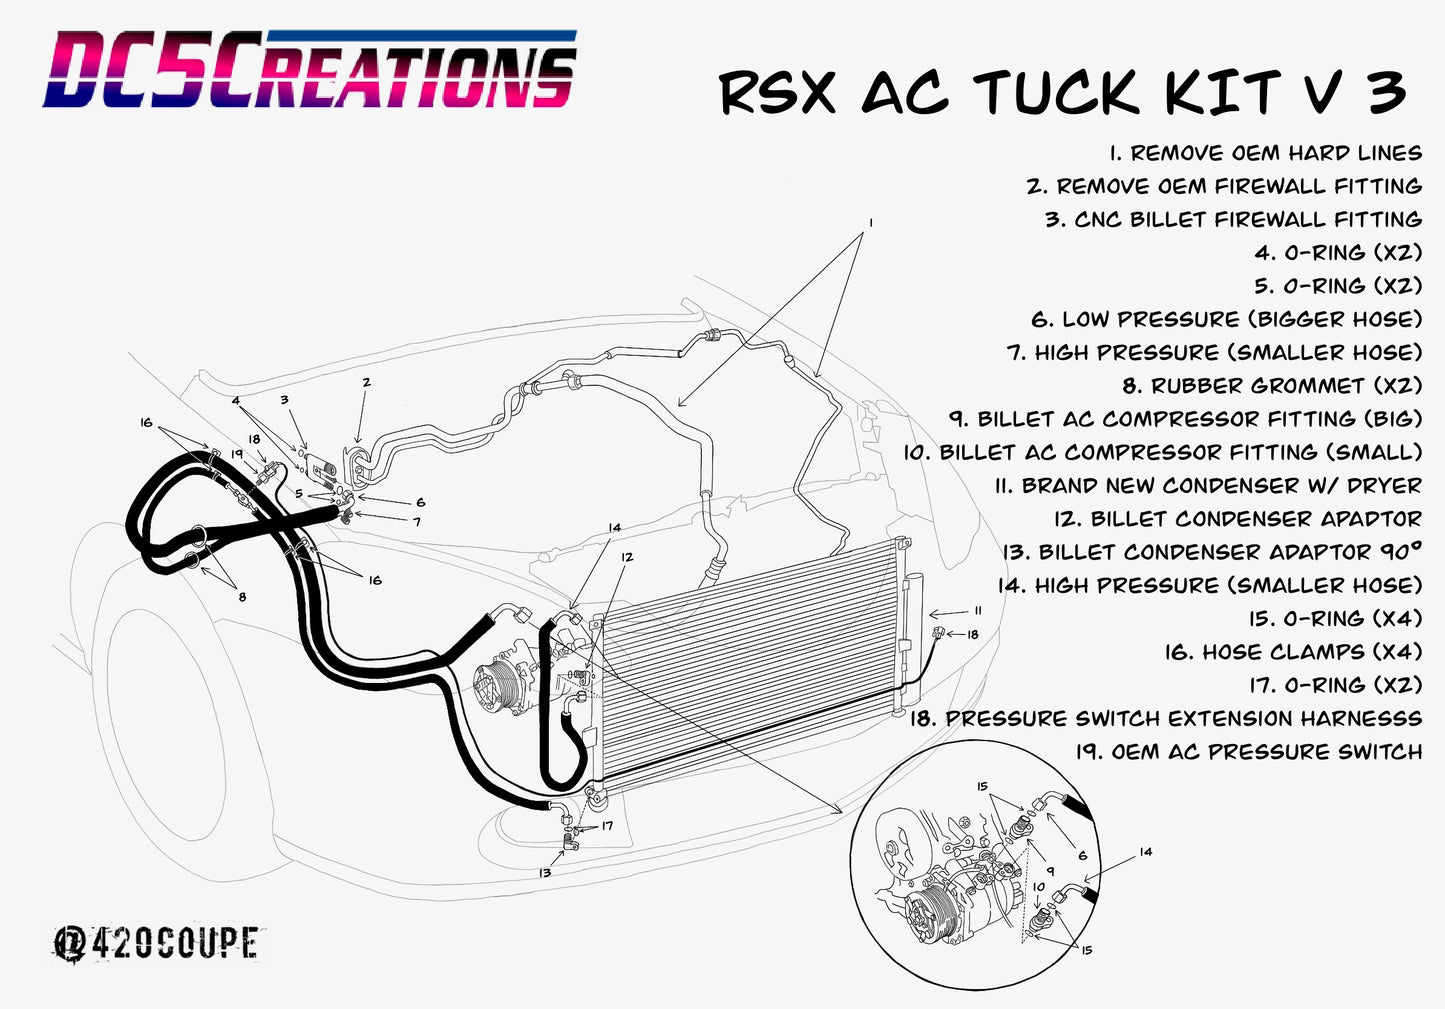 RSX AC TUCK KIT V3